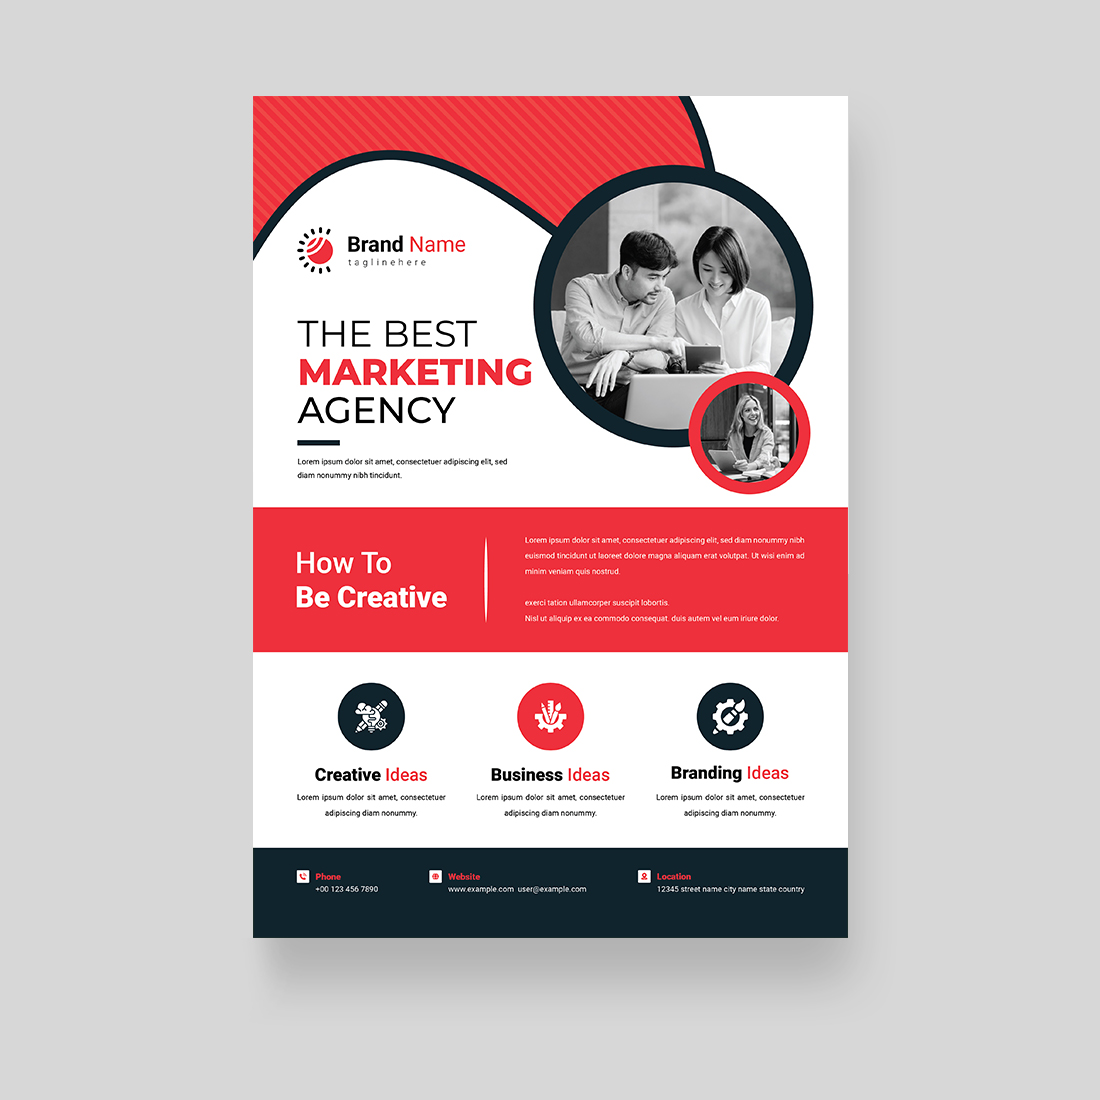 Digital Marketing Flyer Template cover image.